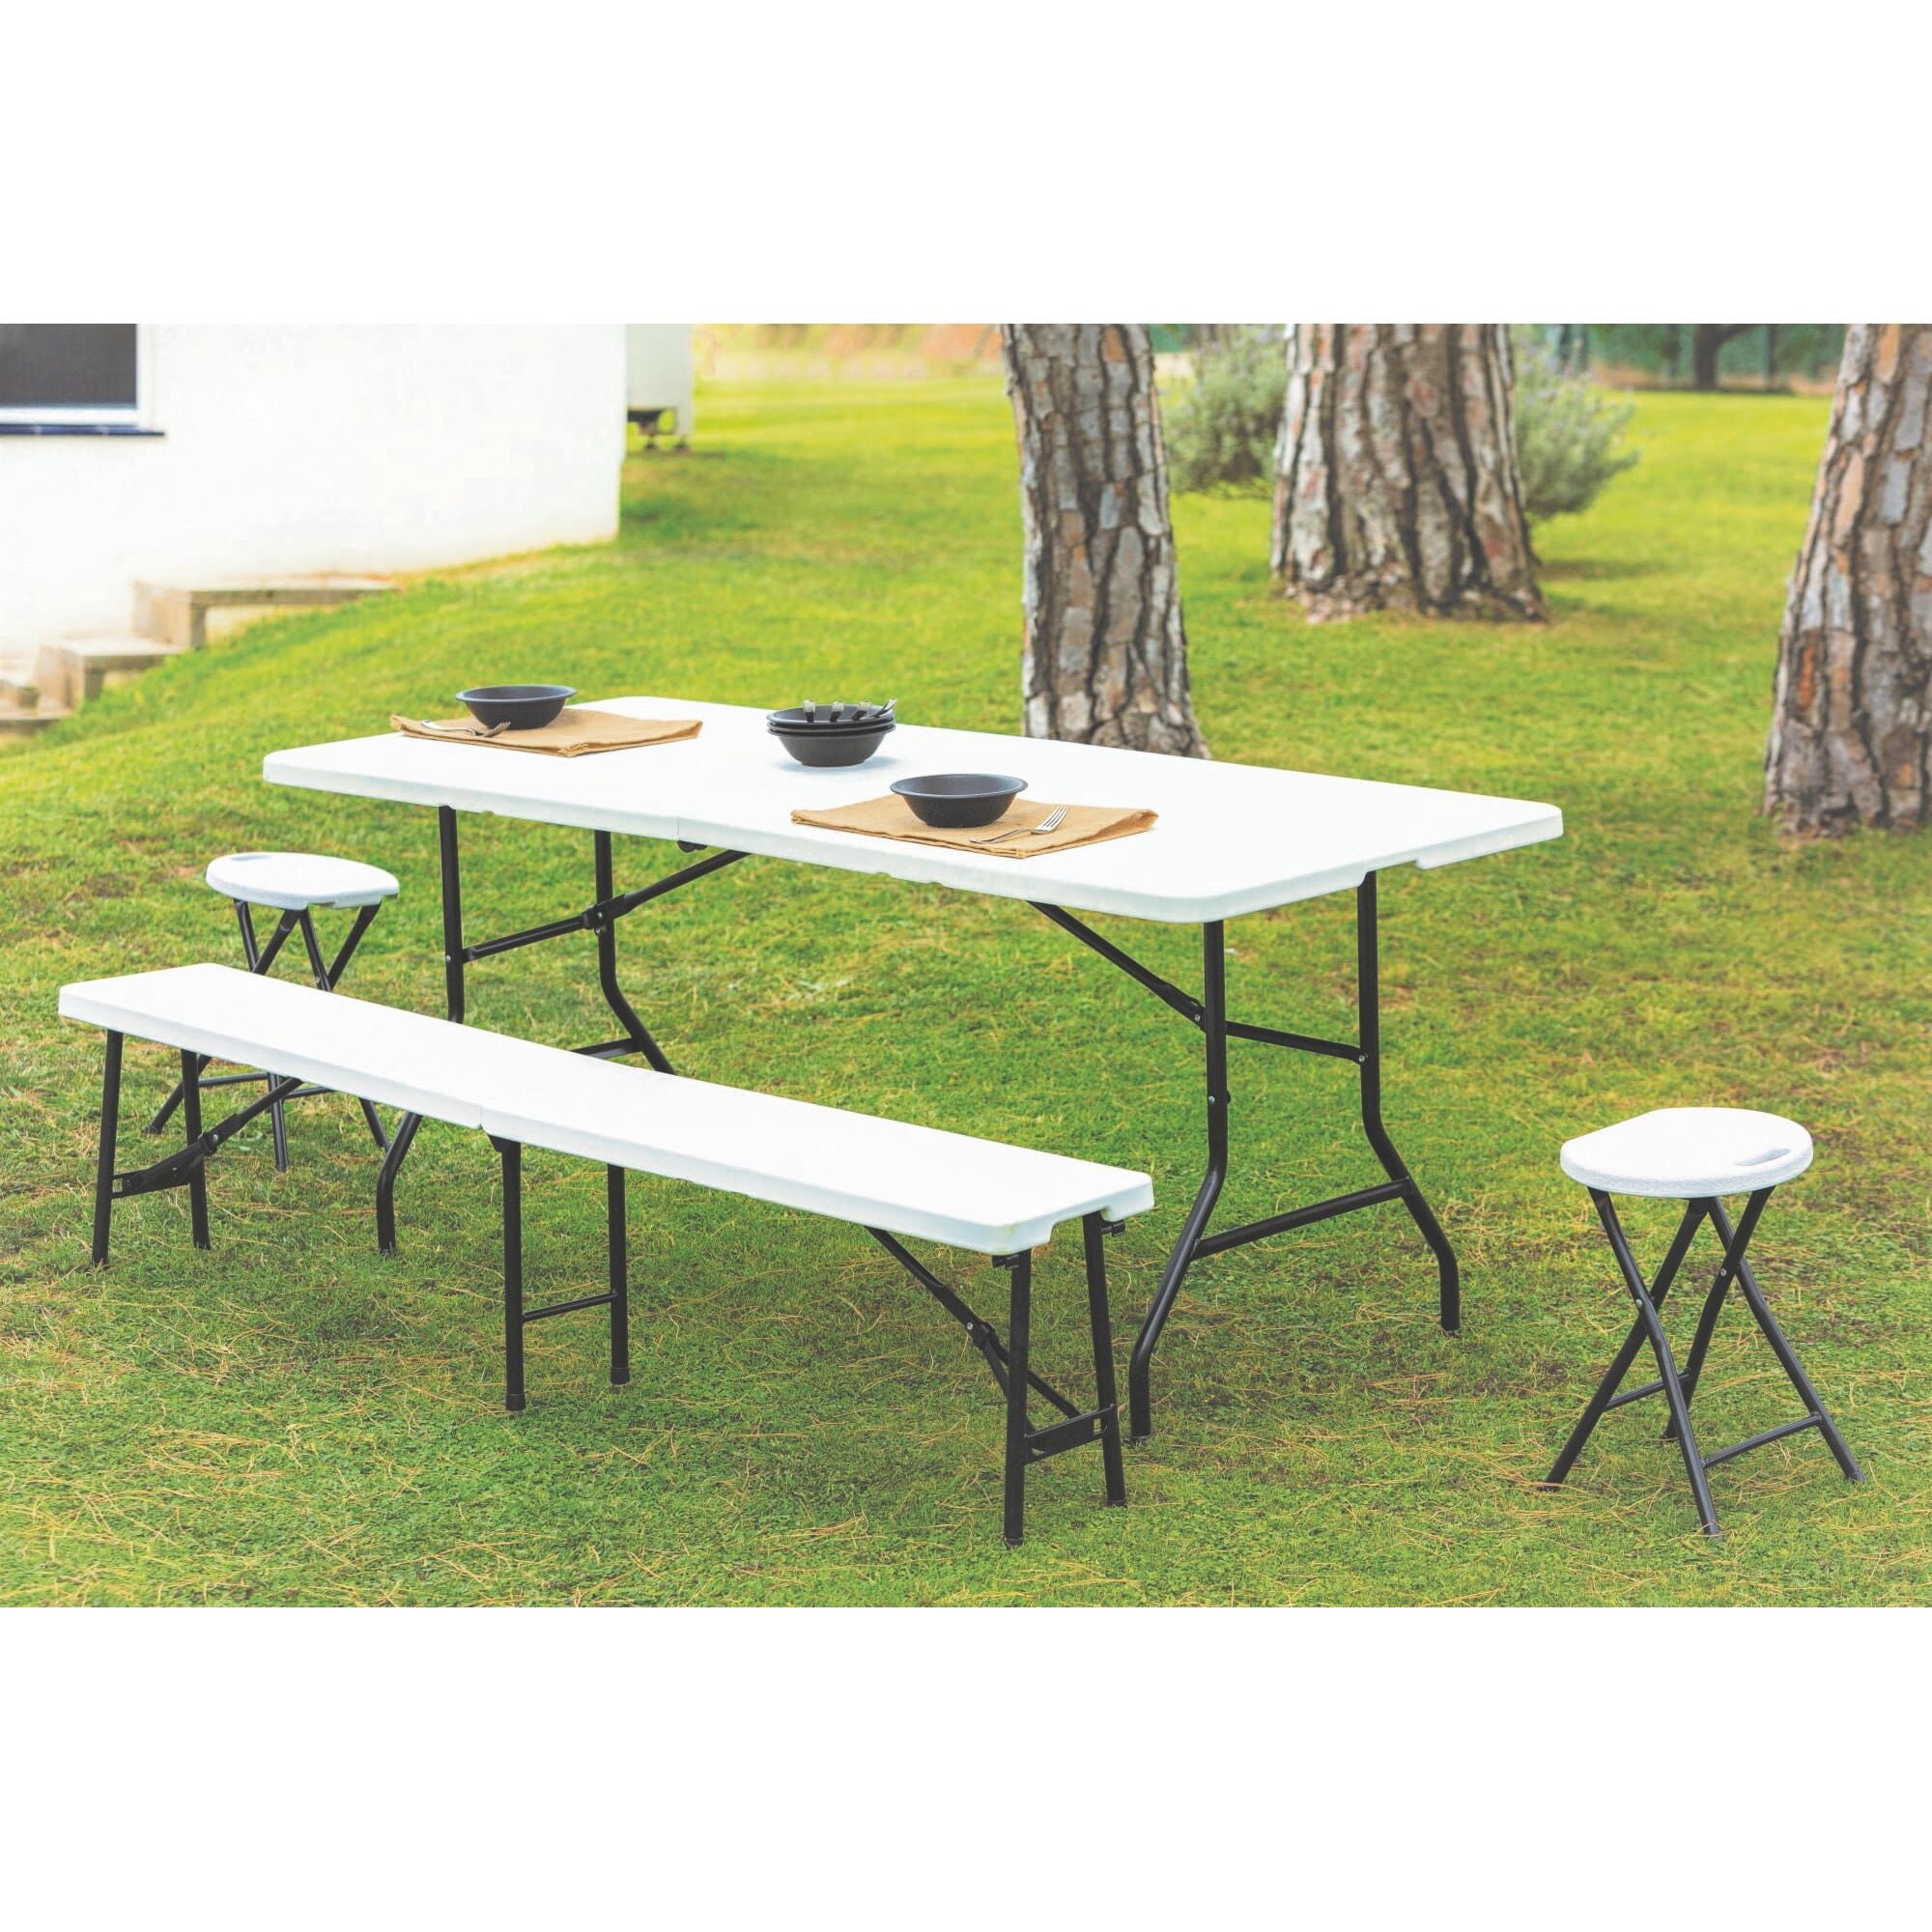 Garbar simple rectangular folding table indoor,